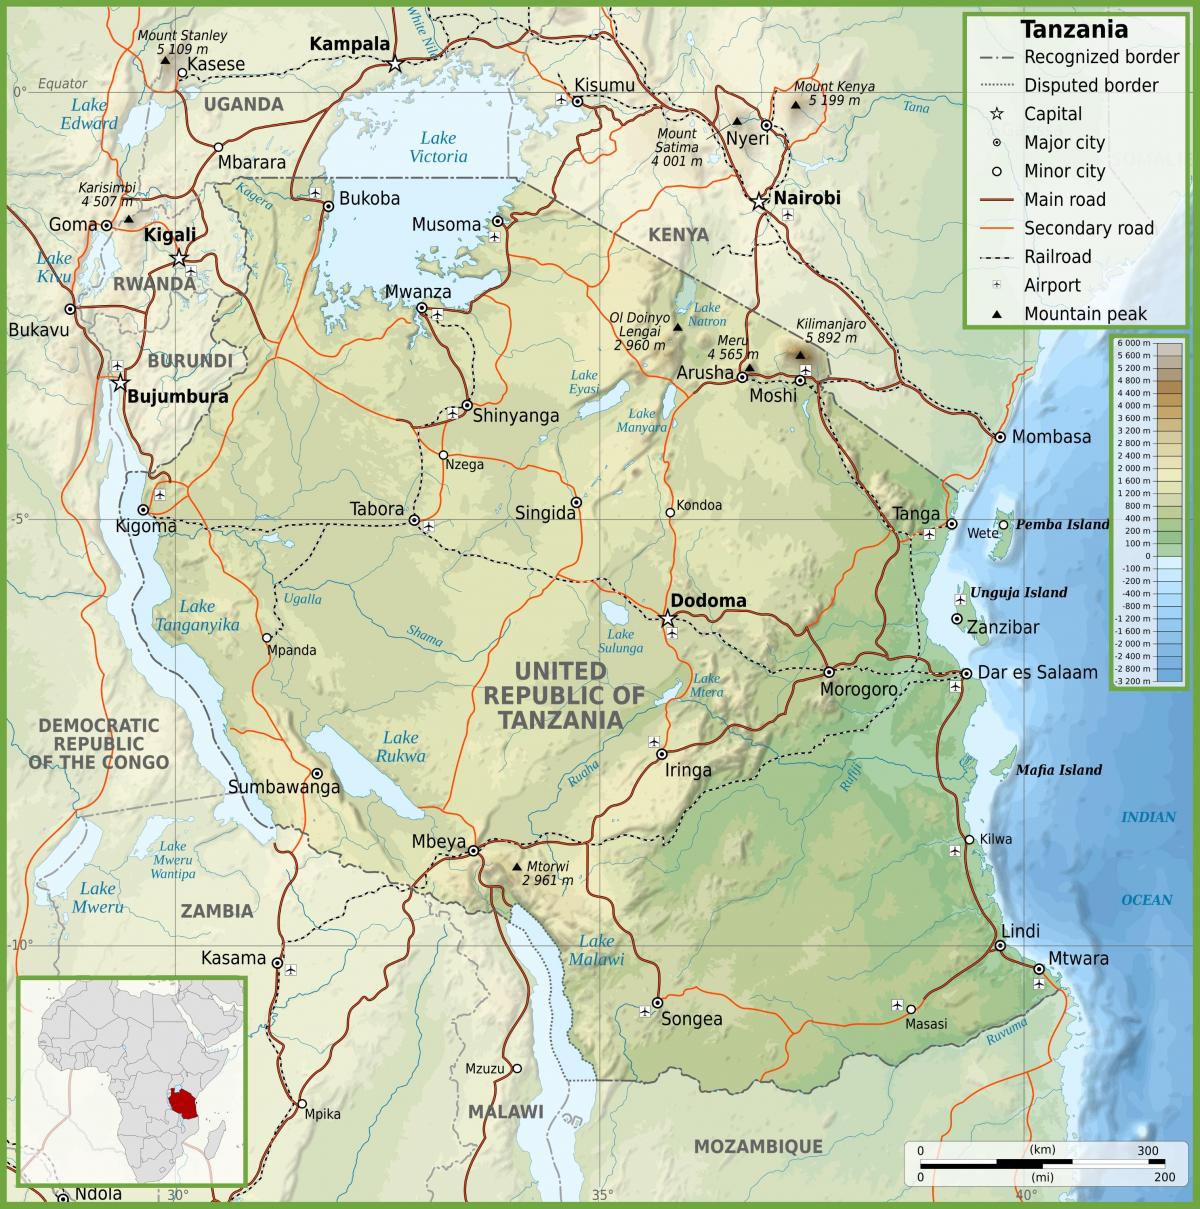 Putokaz Tanzaniji kilometara